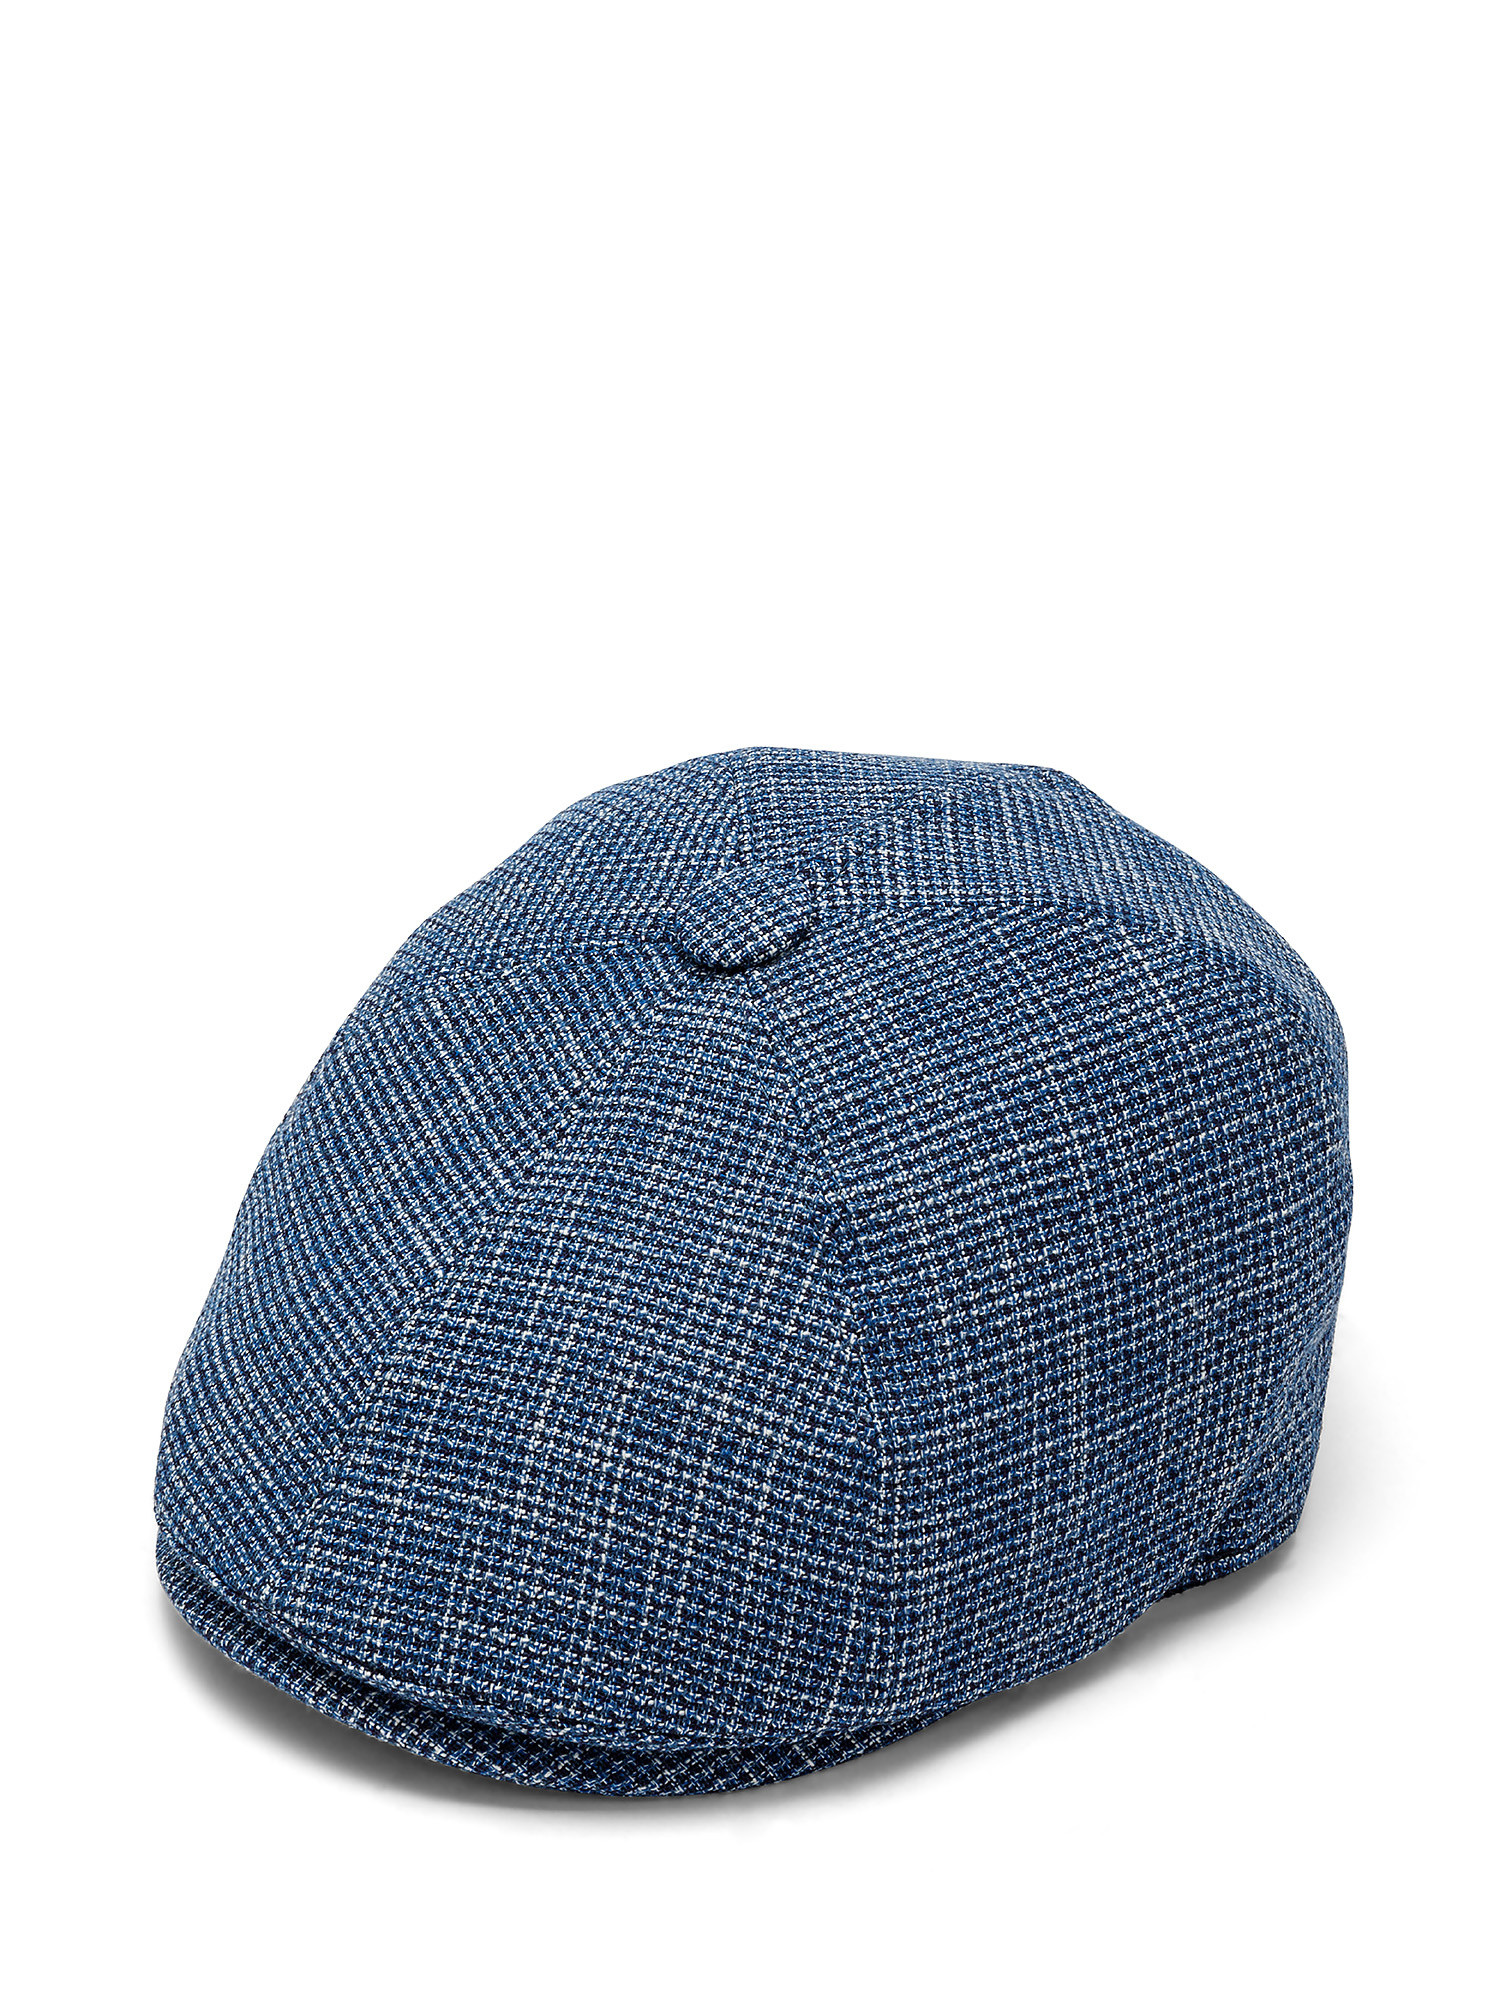 Luca D'Altieri - Patterned linen cap, Light Blue, large image number 0